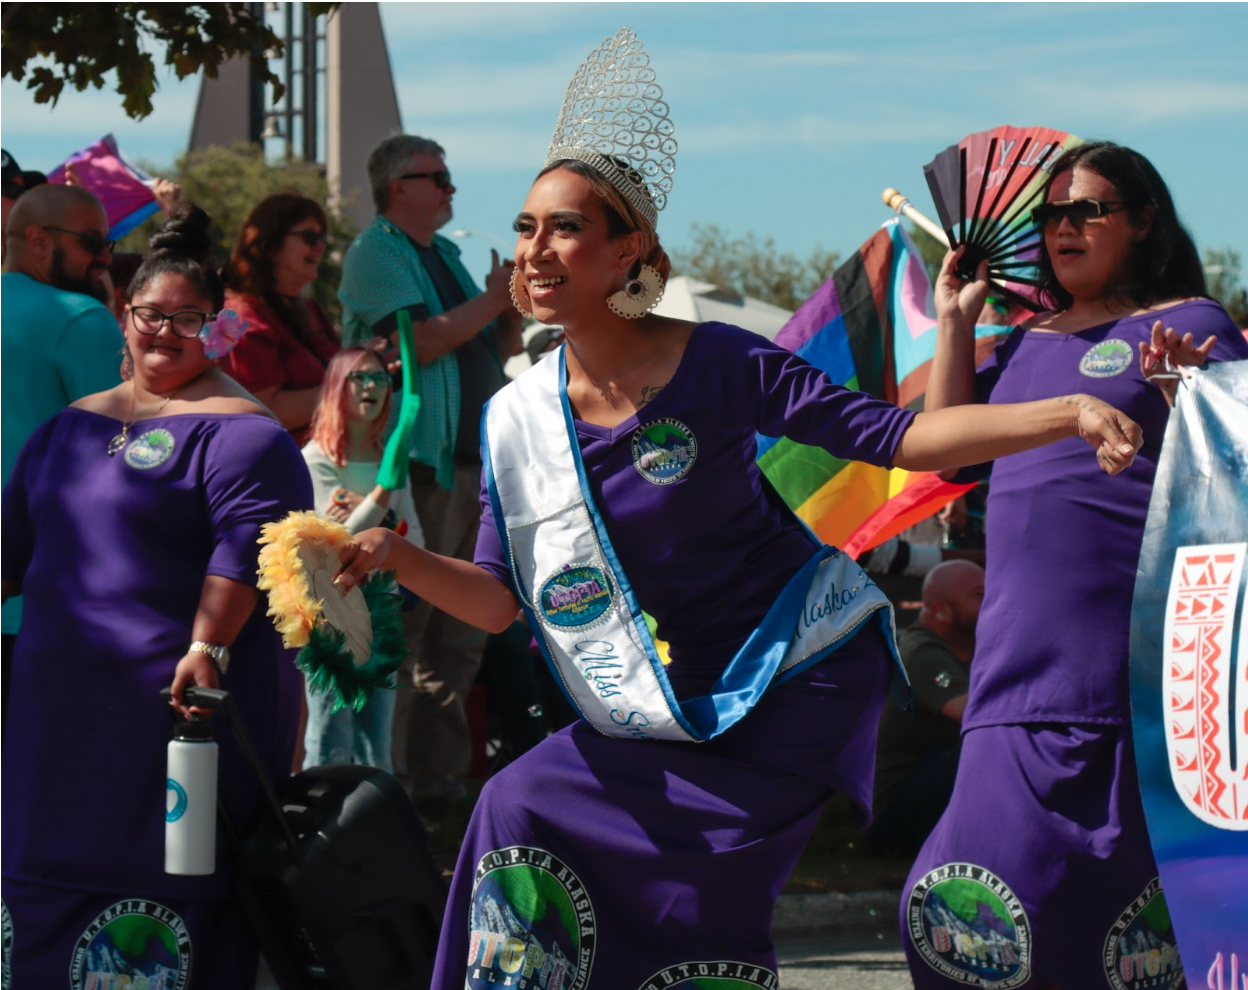 Miss Alaska Snow Queen Kaleionalani Medici Puu Lavatai dances while wearing a bright purple dress, a sash and a crown.